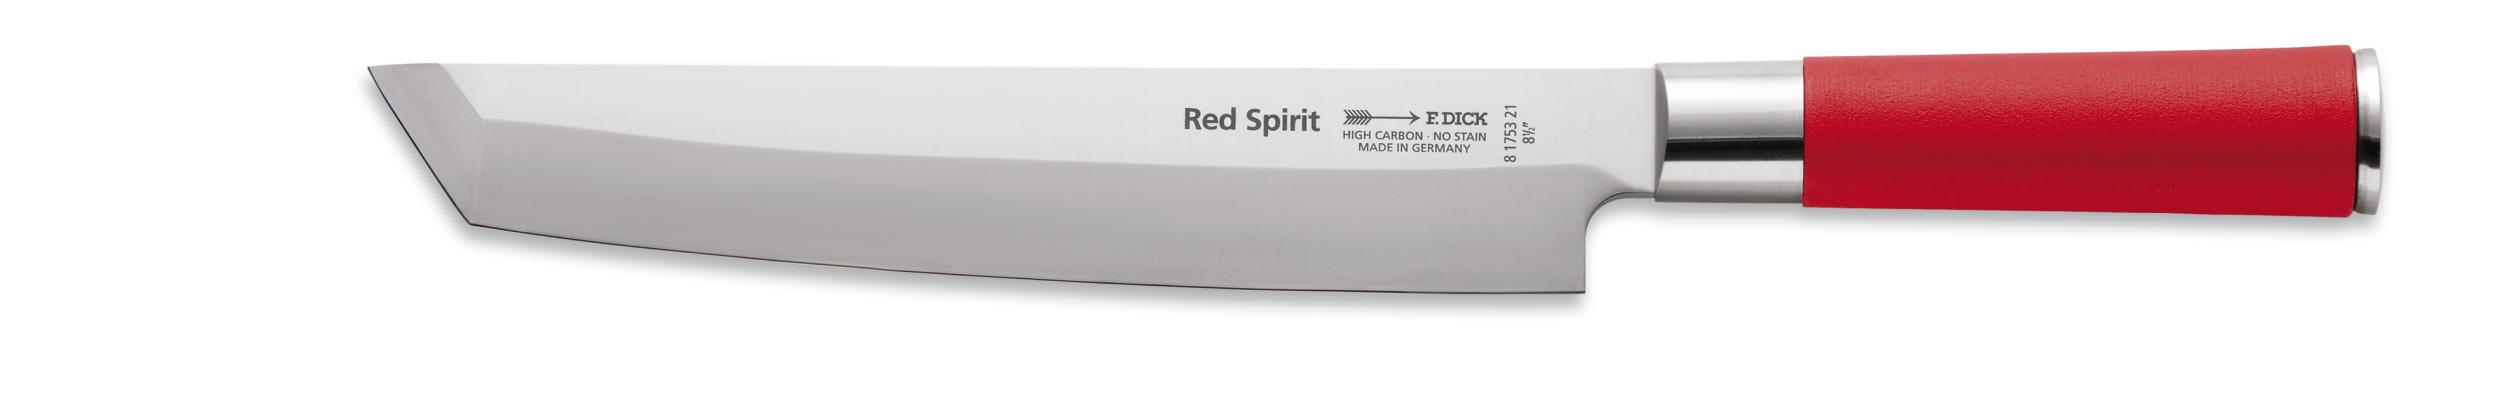 Dick Red Spirit Universalmesser